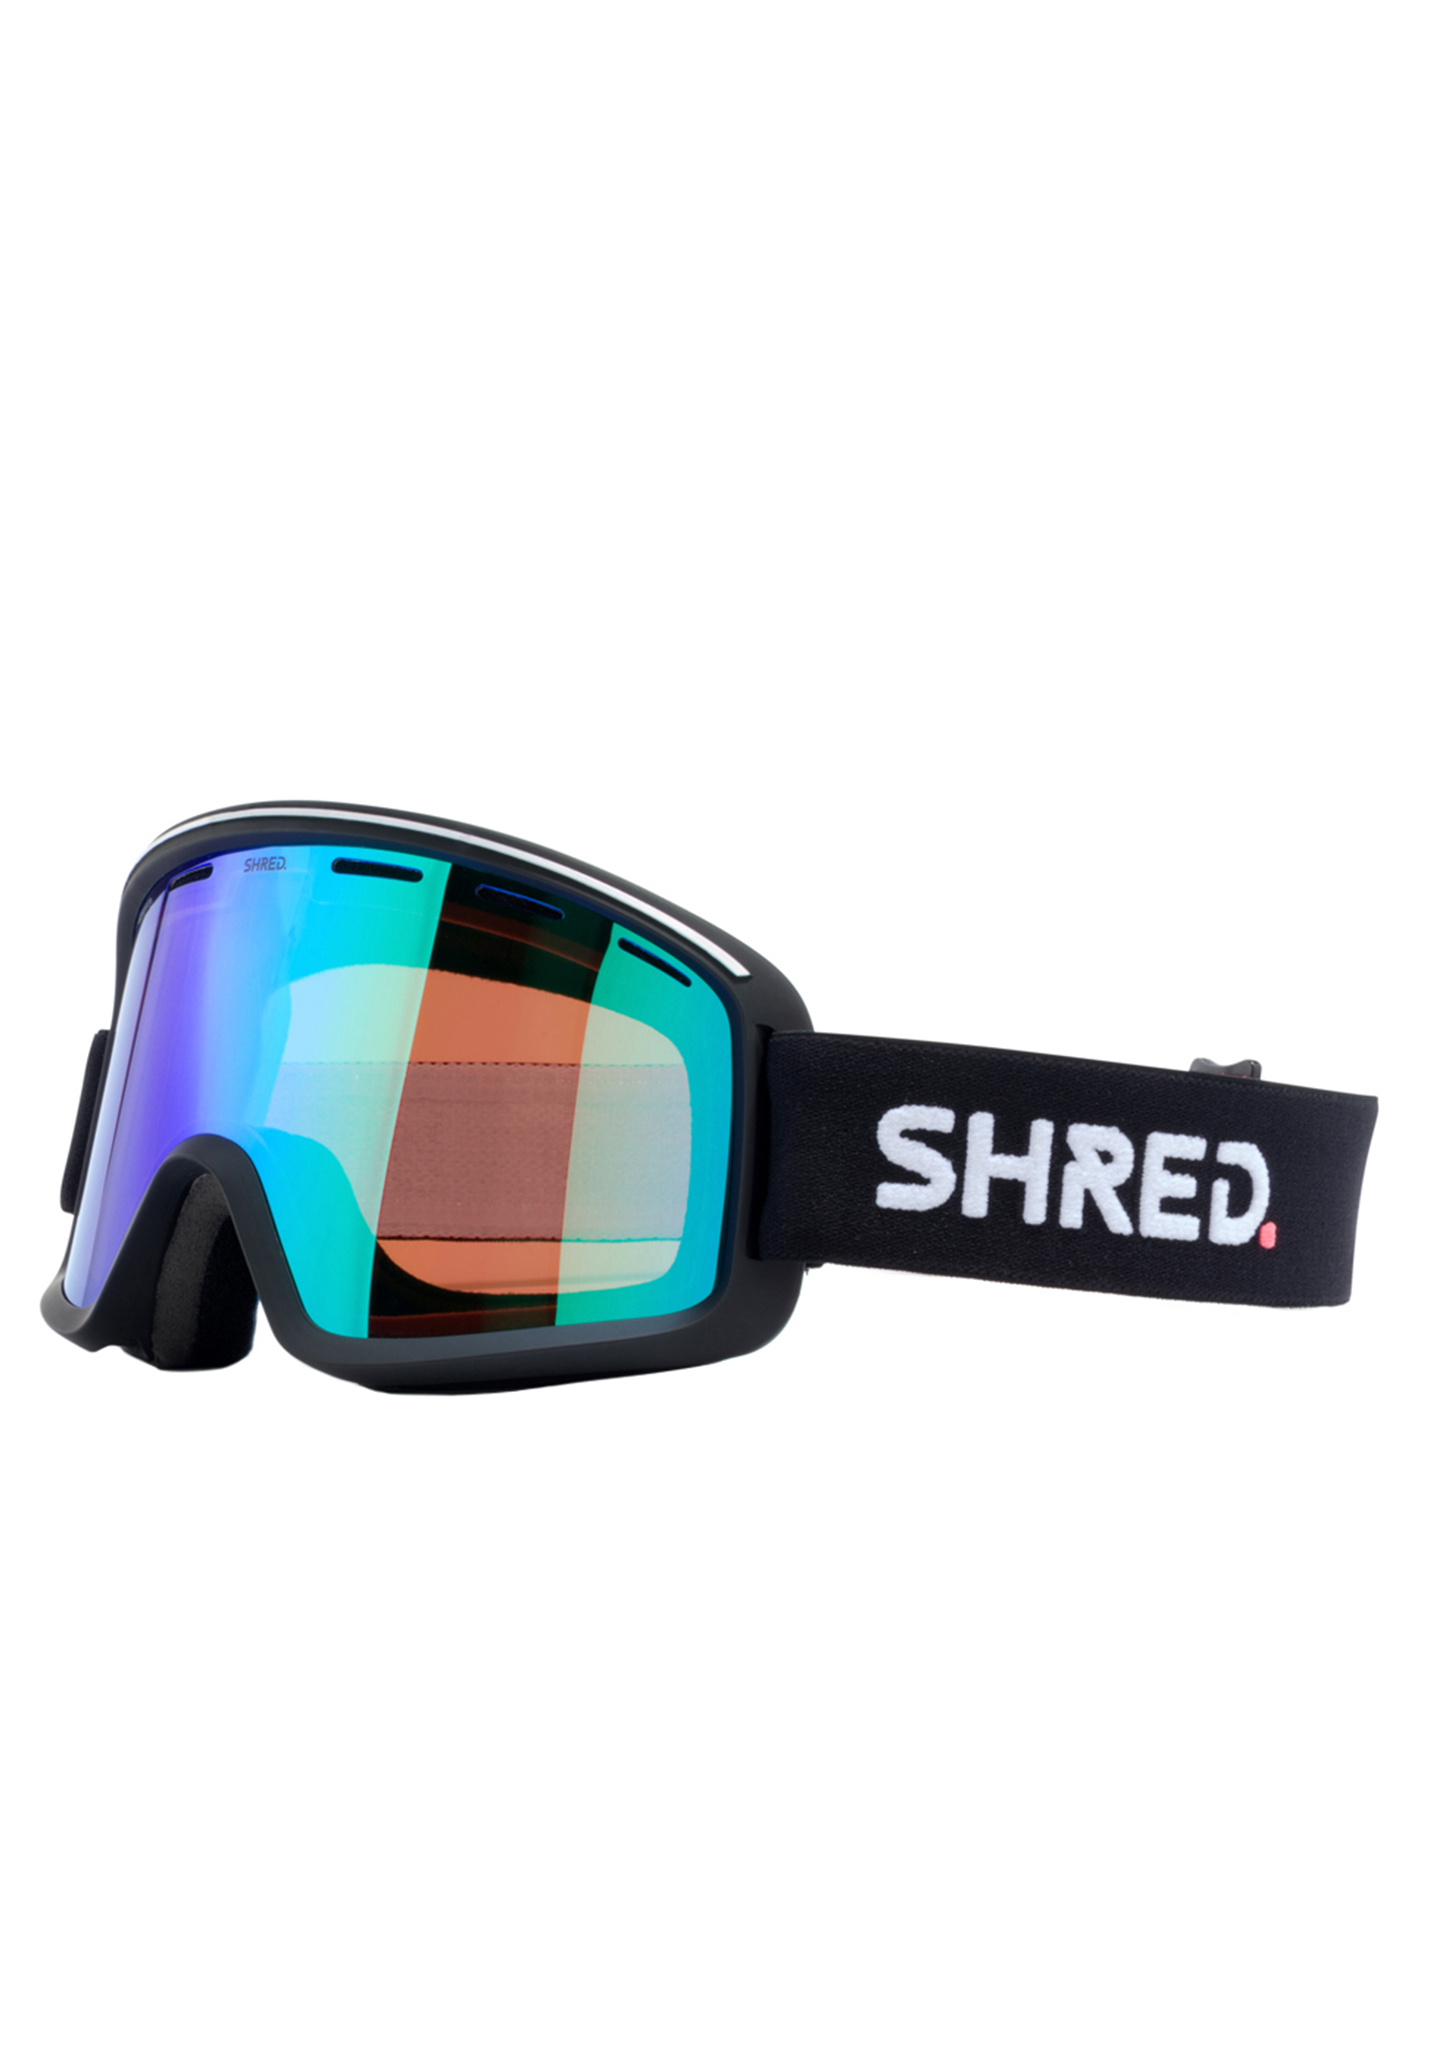 Shred Monocle Snowboardbrillen schwarz/cbl plasma spiegel One Size